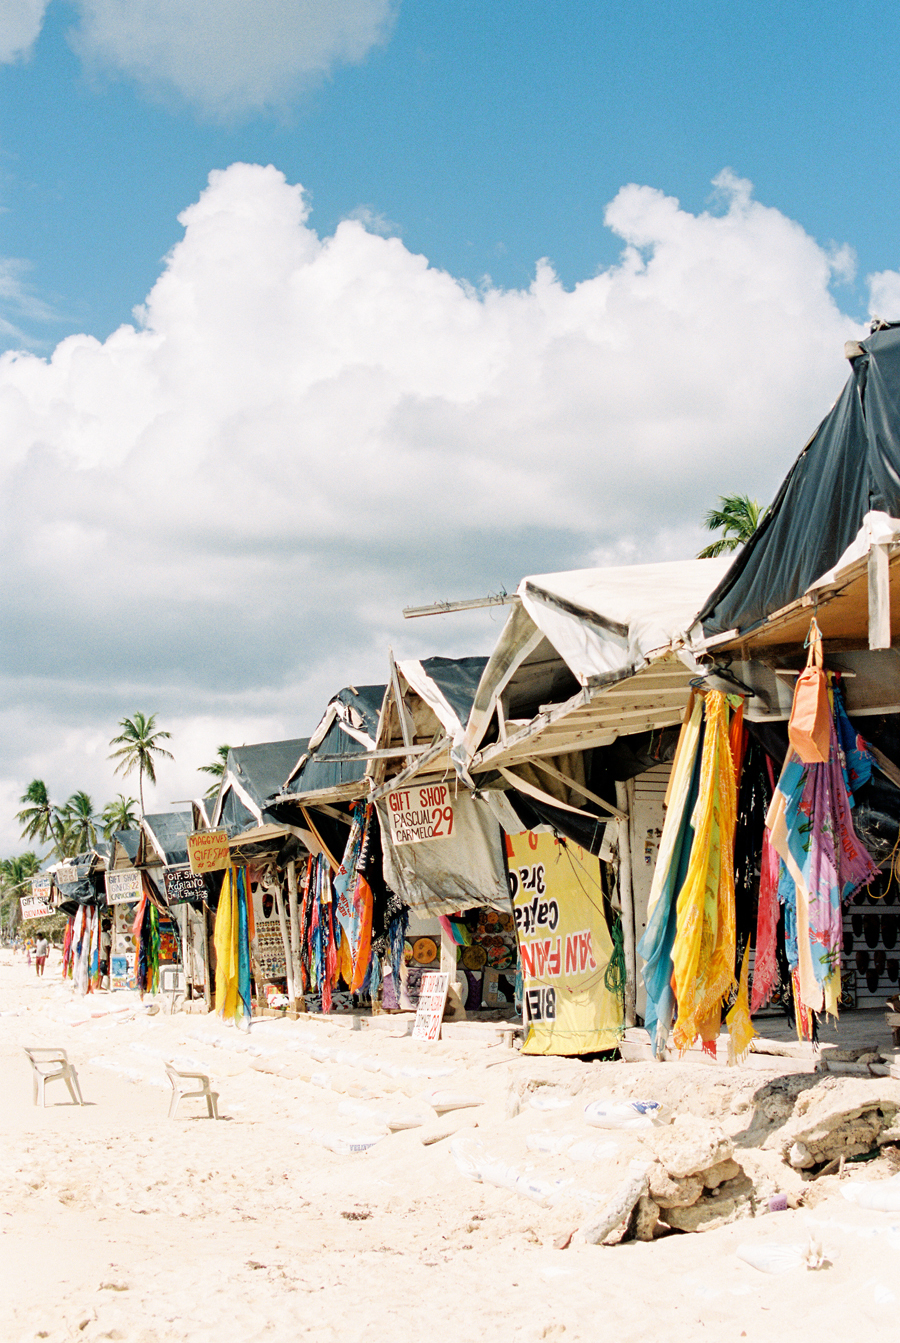 Beach Vendors in the Dominican Republic